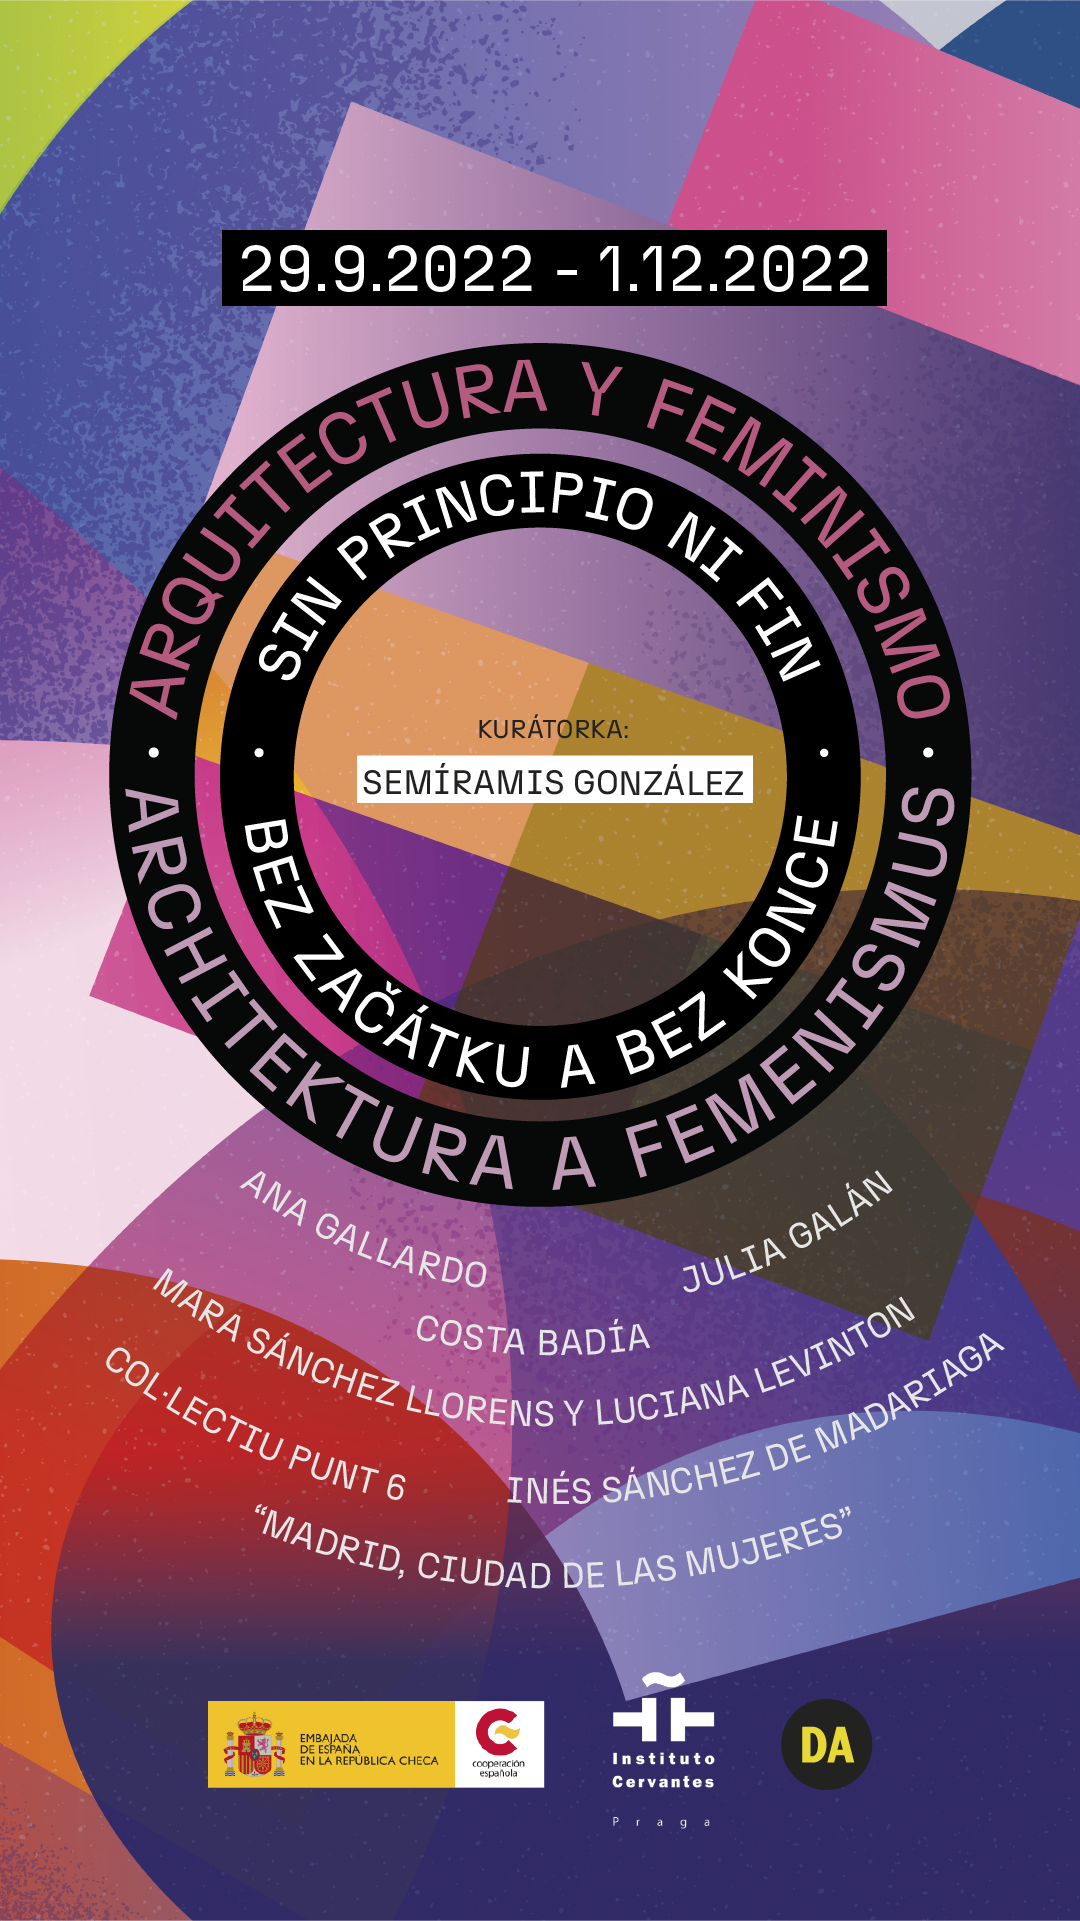 Visita la muestra: Arquitectura y Feminismo: sin principio ni fin